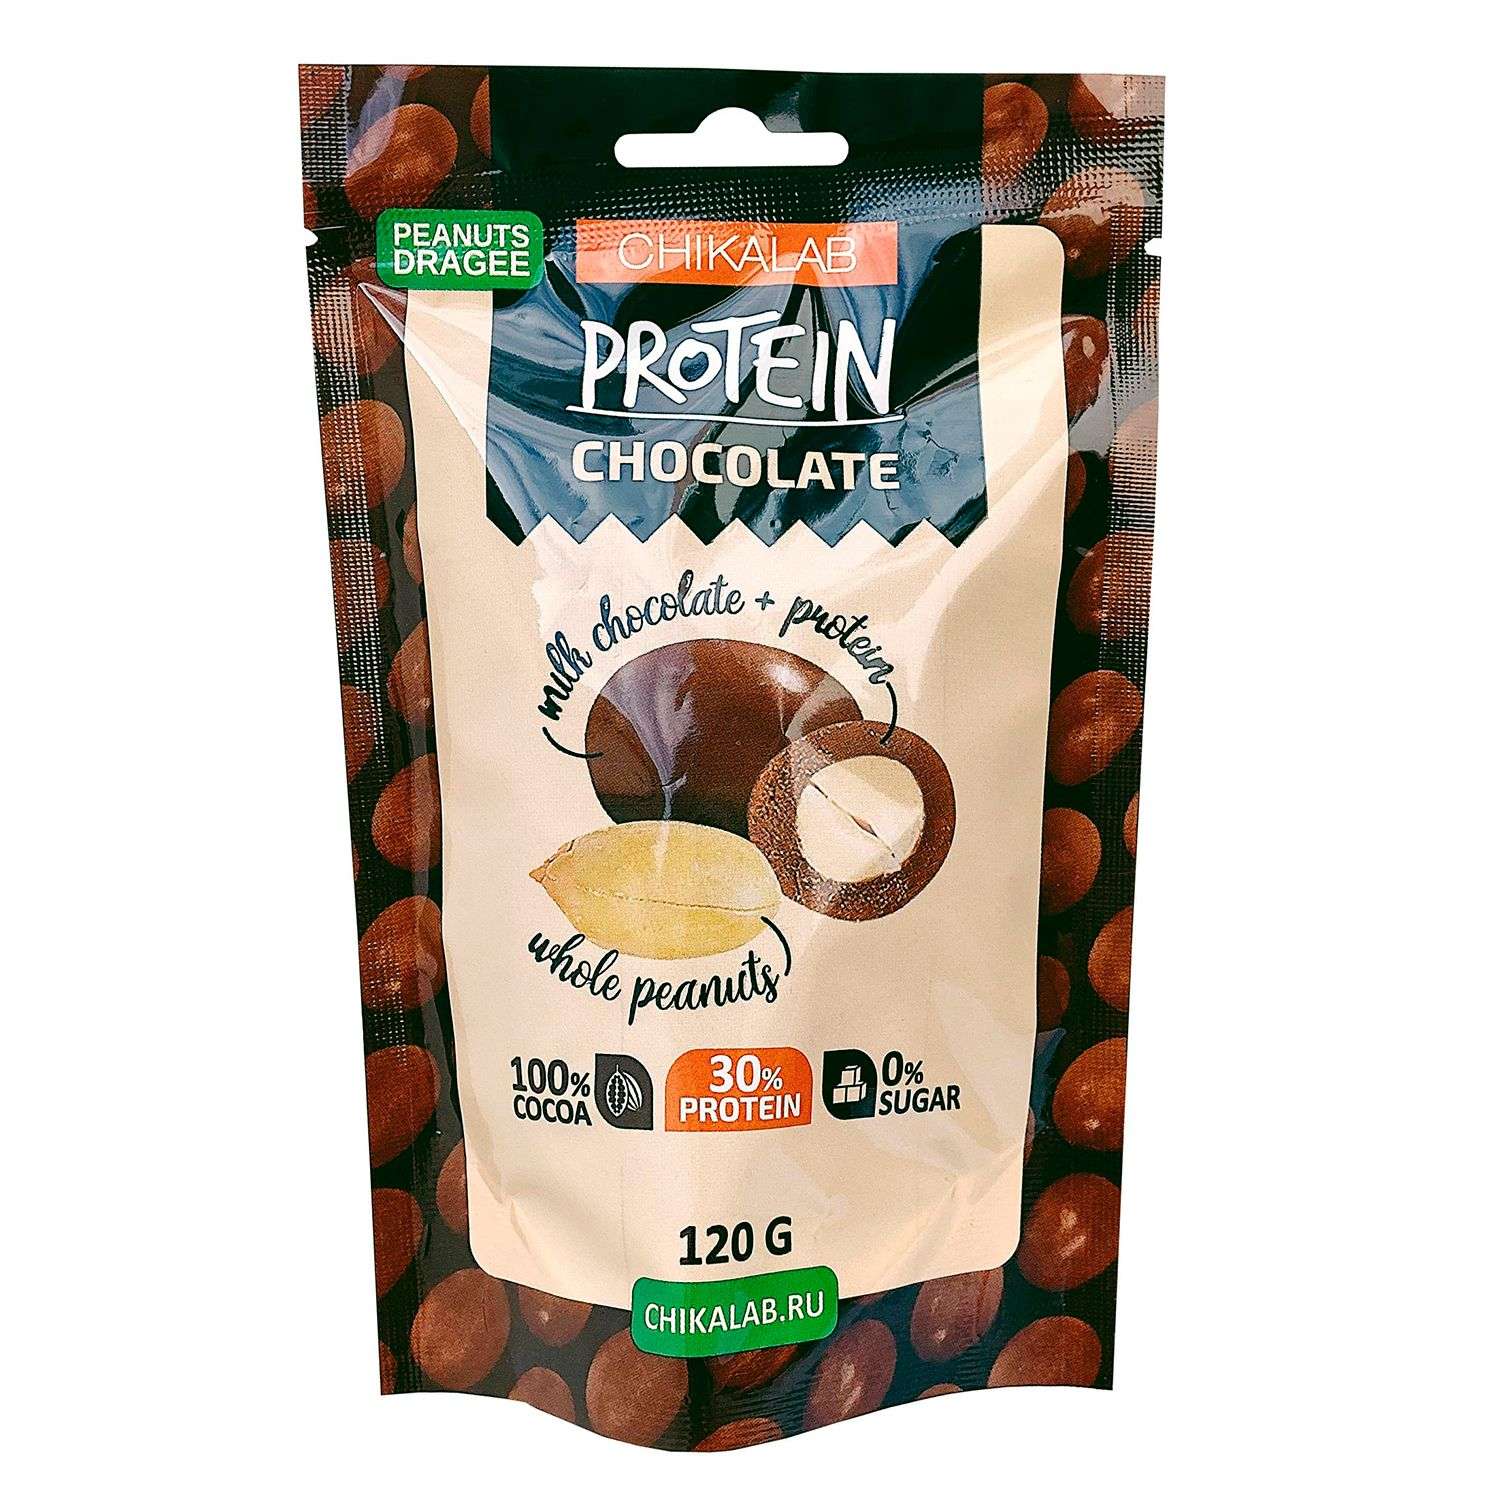 Драже Chikalab протеиновое арахис в шоколаде 120г - фото 1